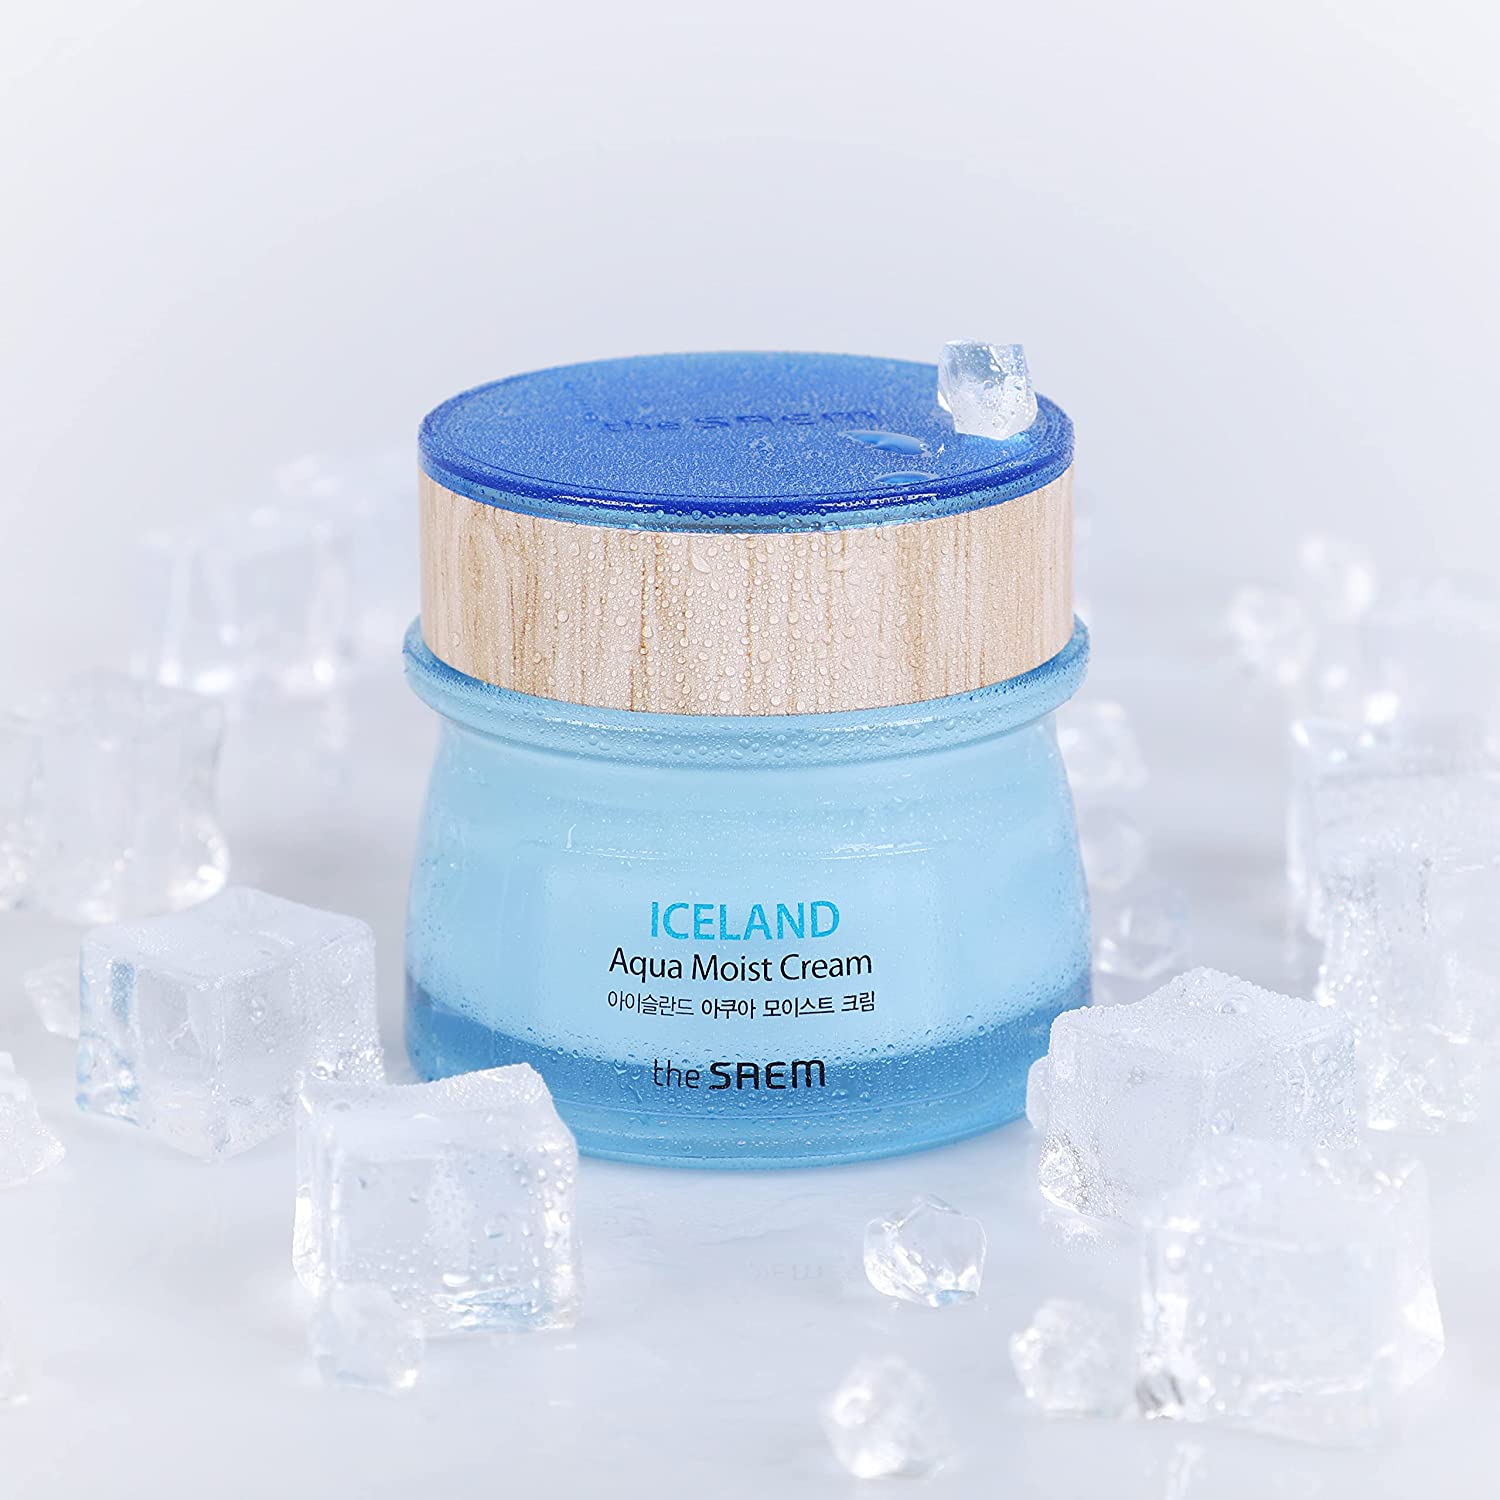 THE SAEM iceland aqua moist cream